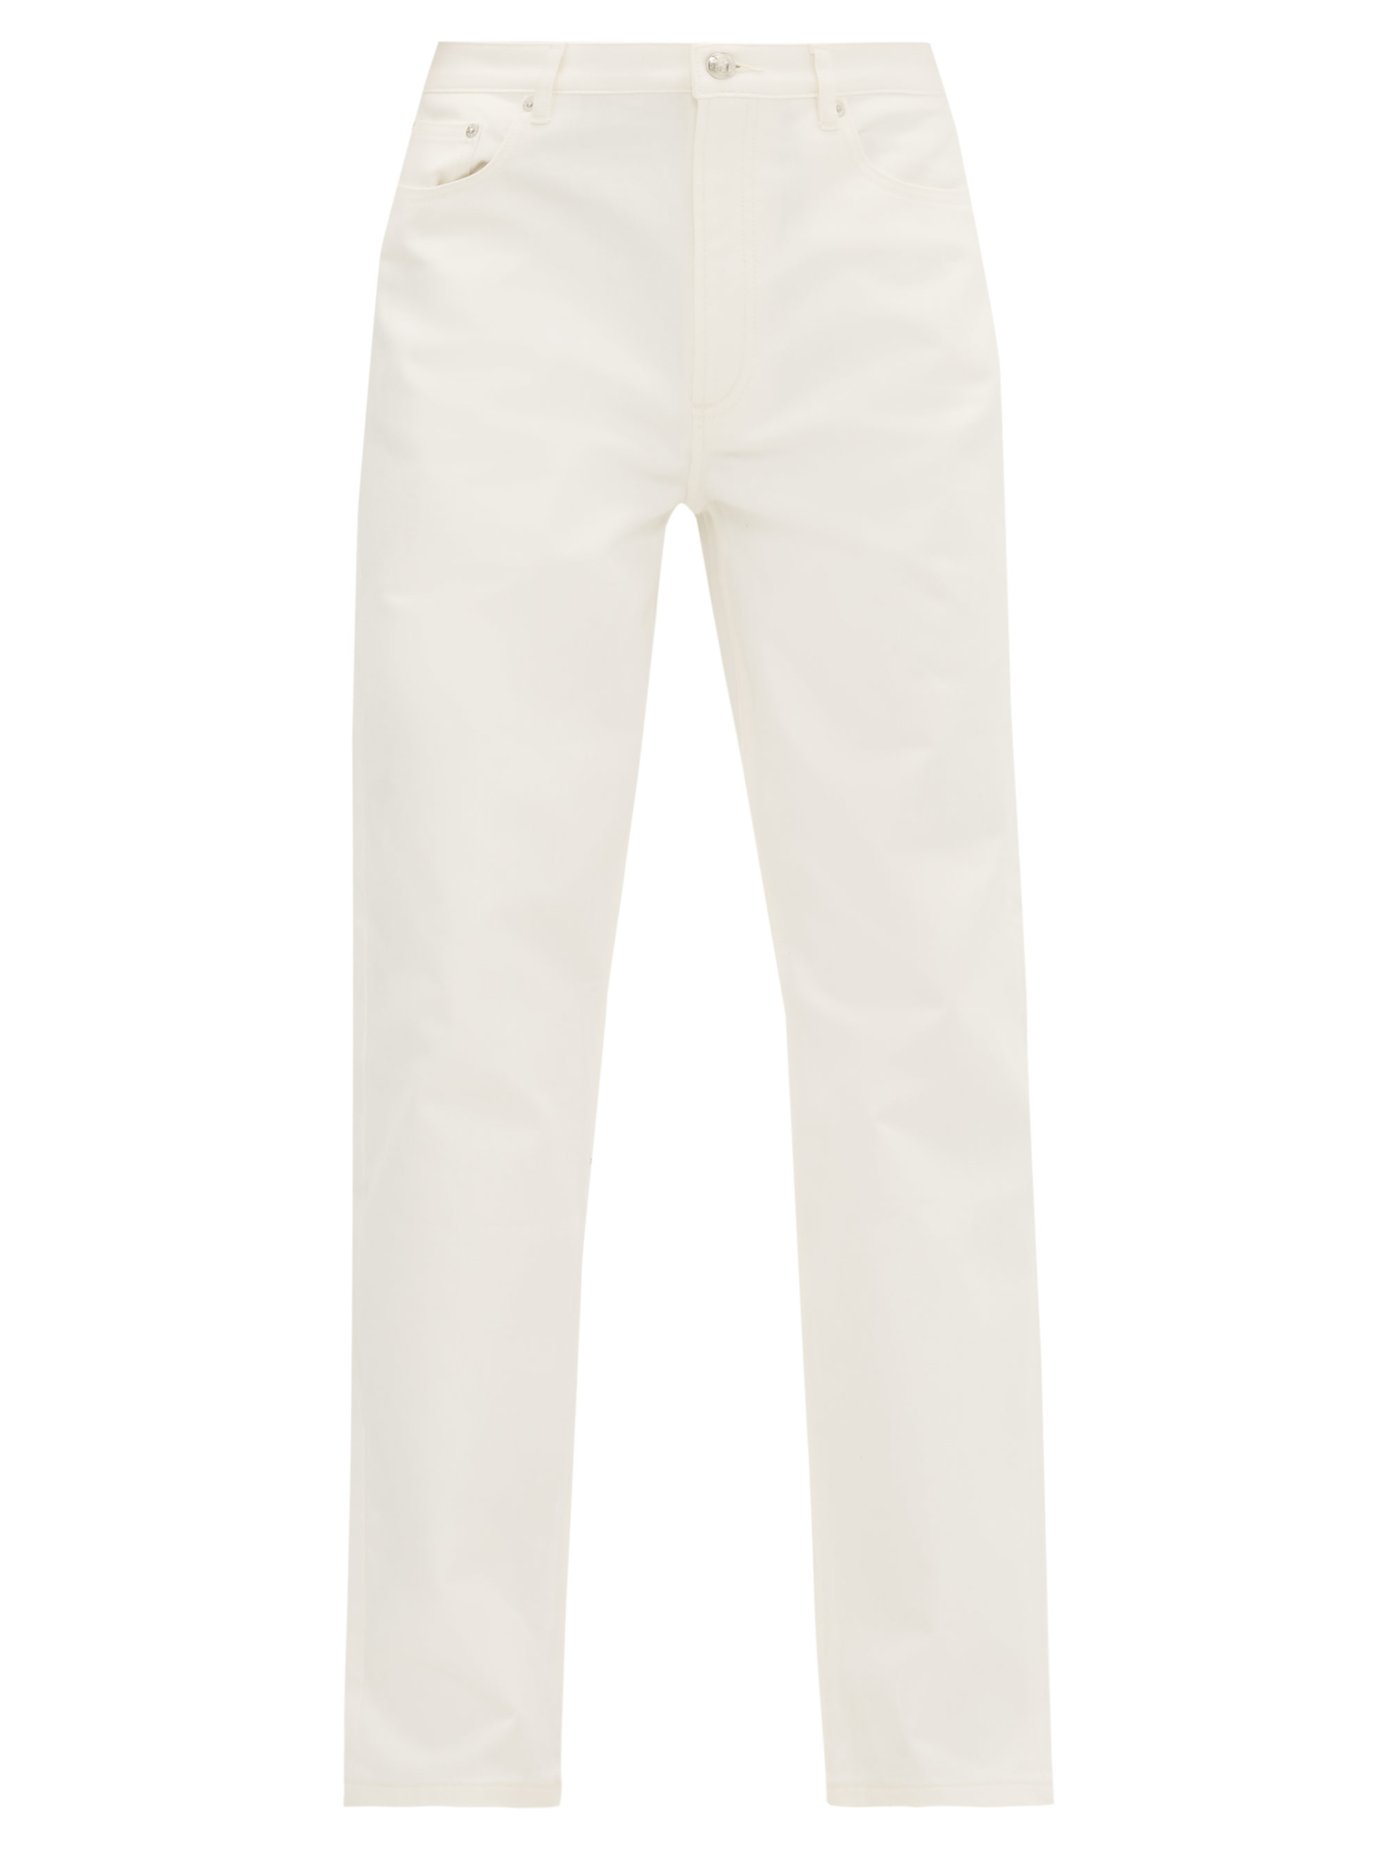 apc white jeans